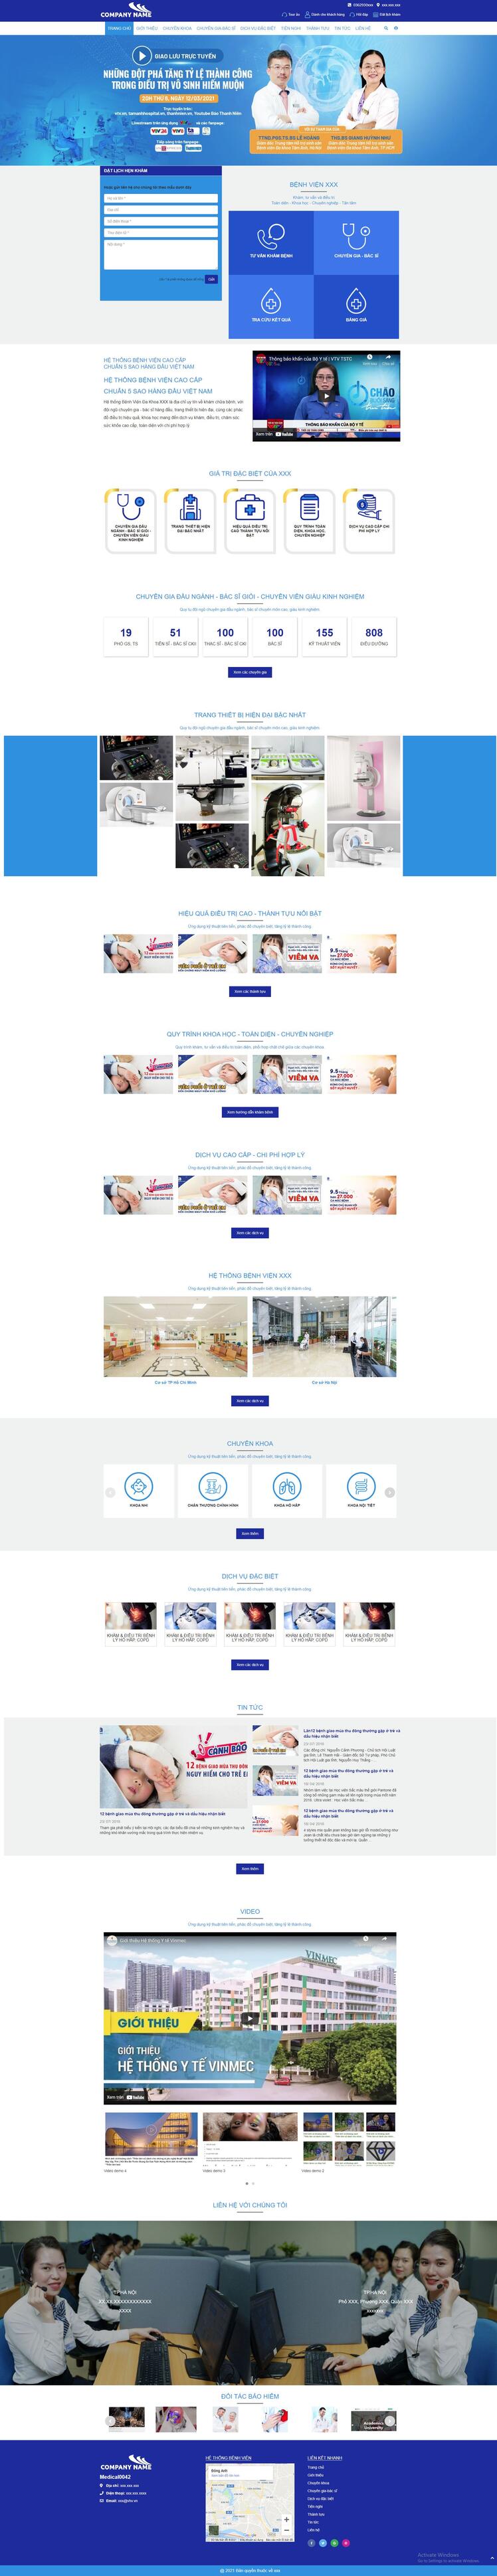 Thiết kế website bệnh viện 42